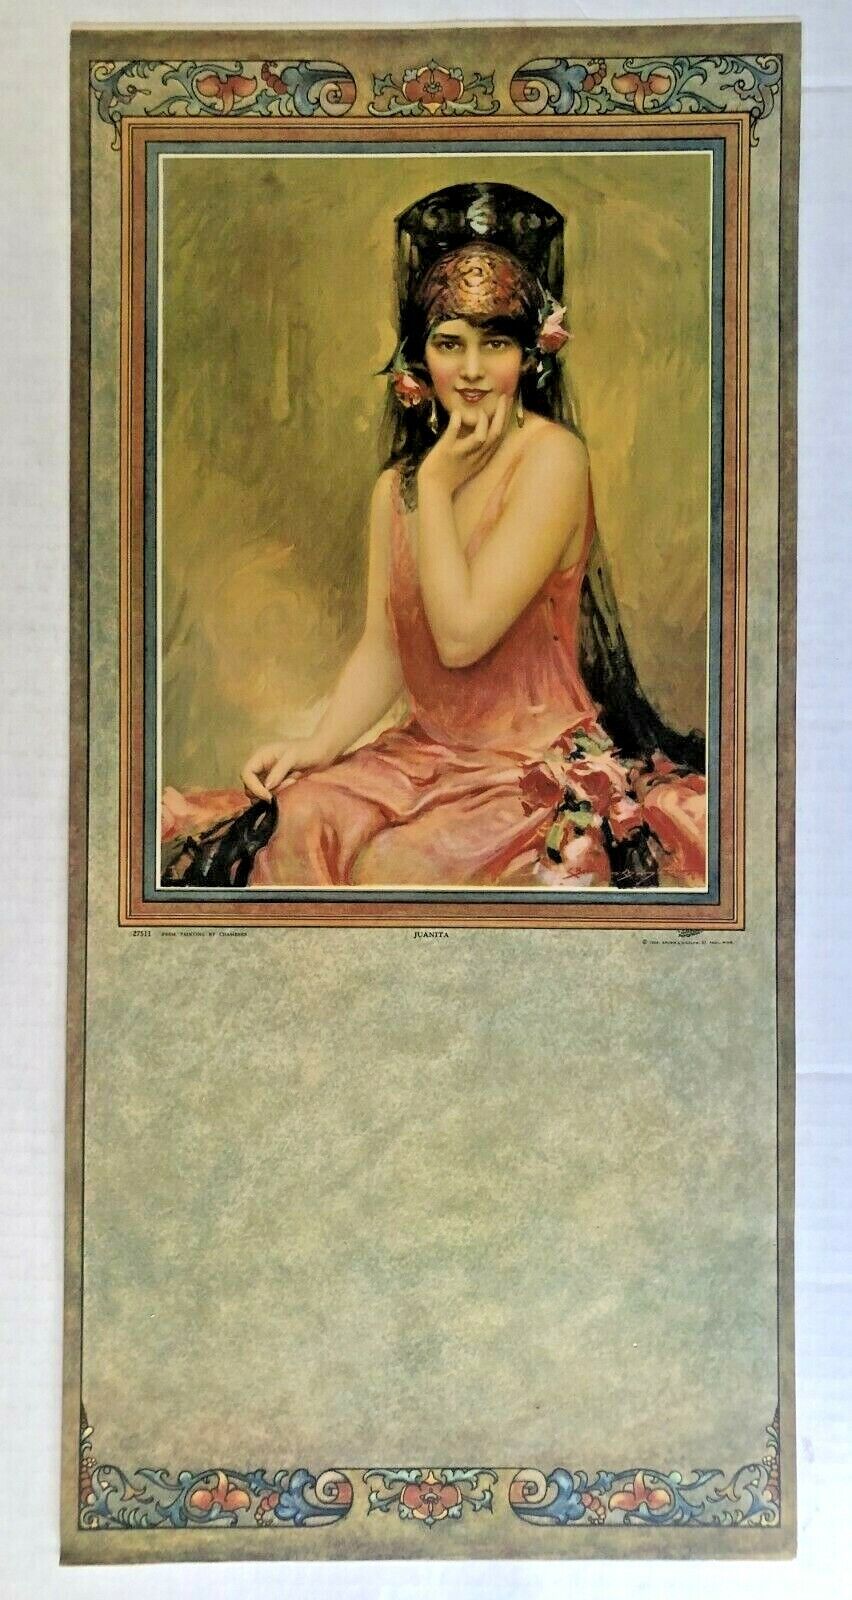 Gorgeous 1926 Pinup Girl Picture by Chambers of Sexy Spanish Senorita- Juanita